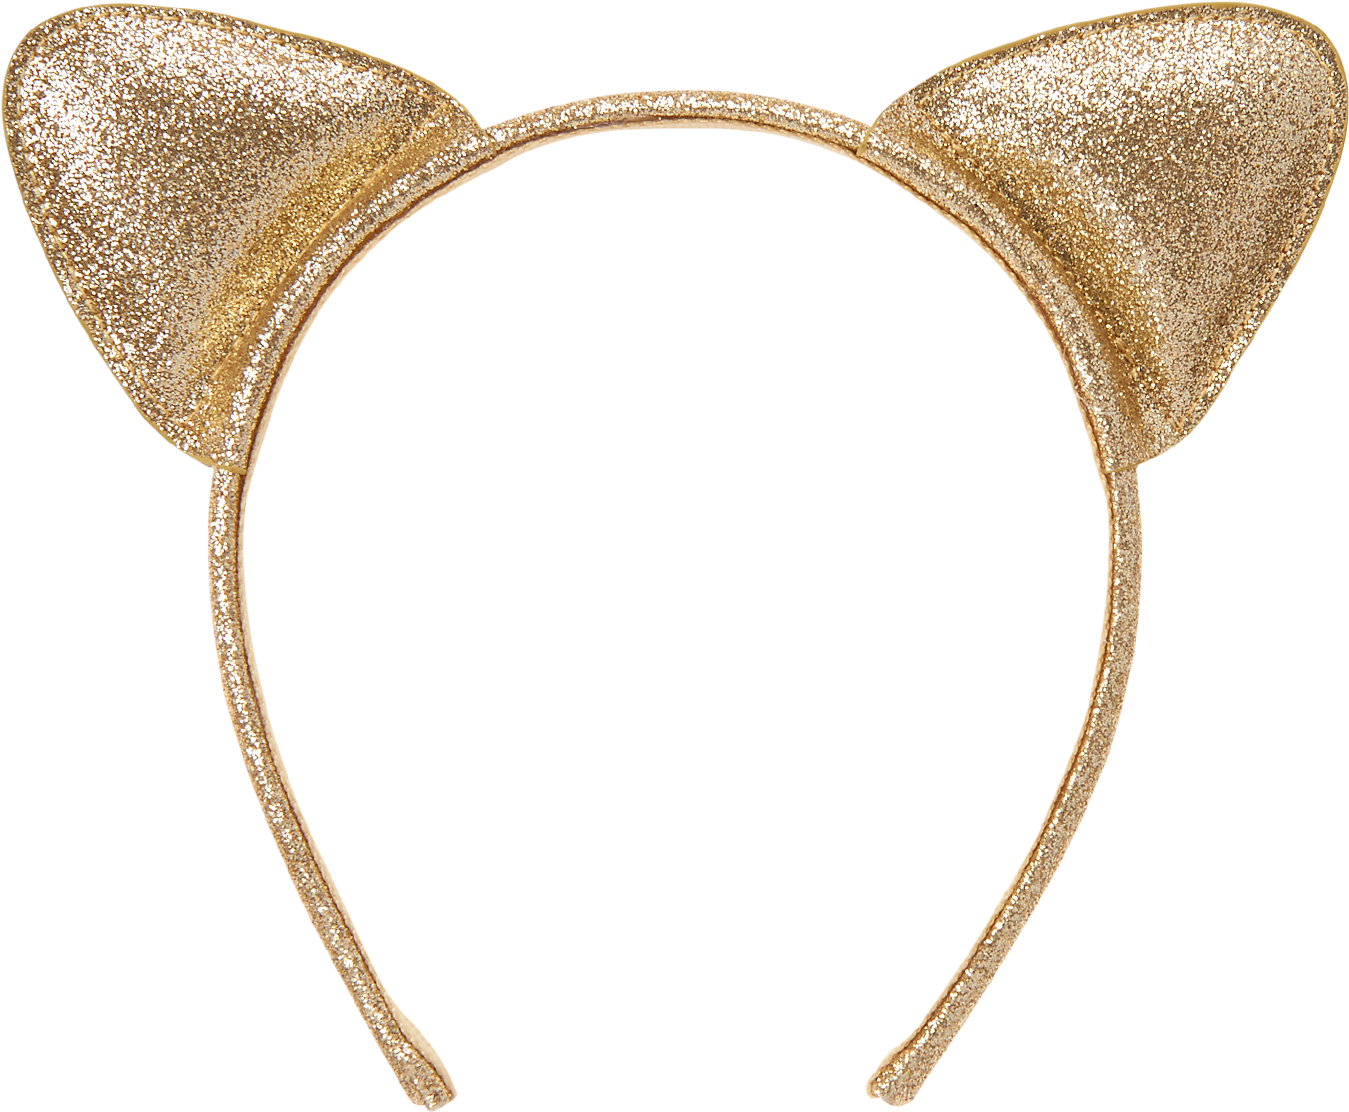 A Headband With Ears